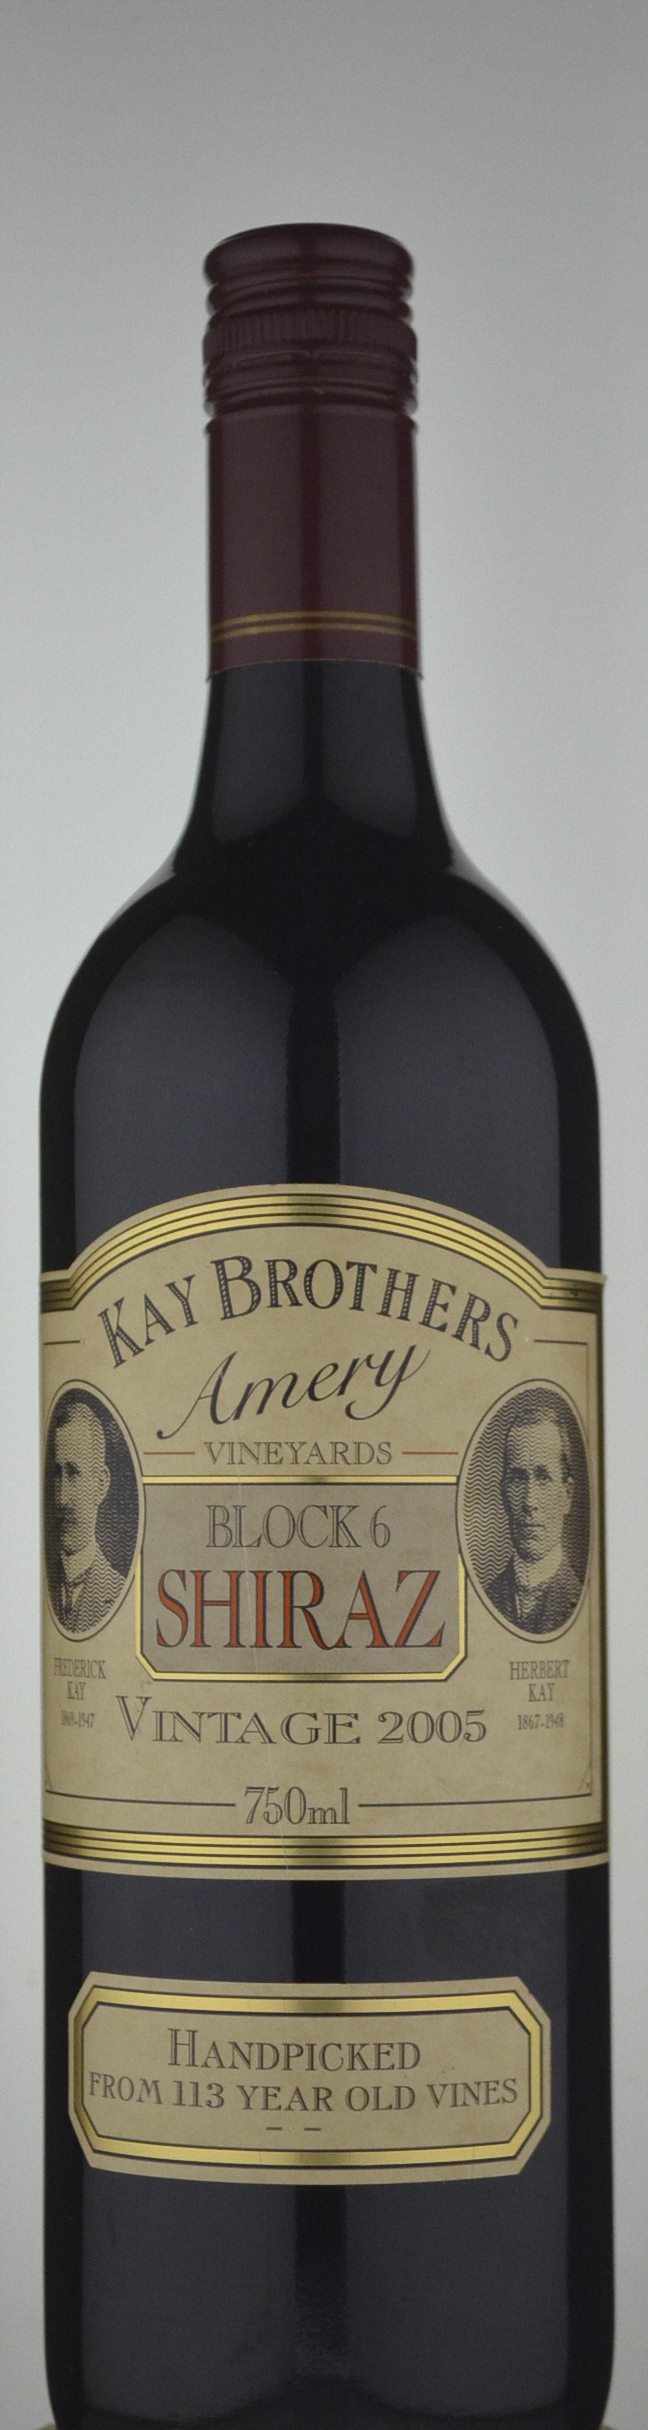 Kay Brothers Amery Block 6 Old Vine Shiraz 2005